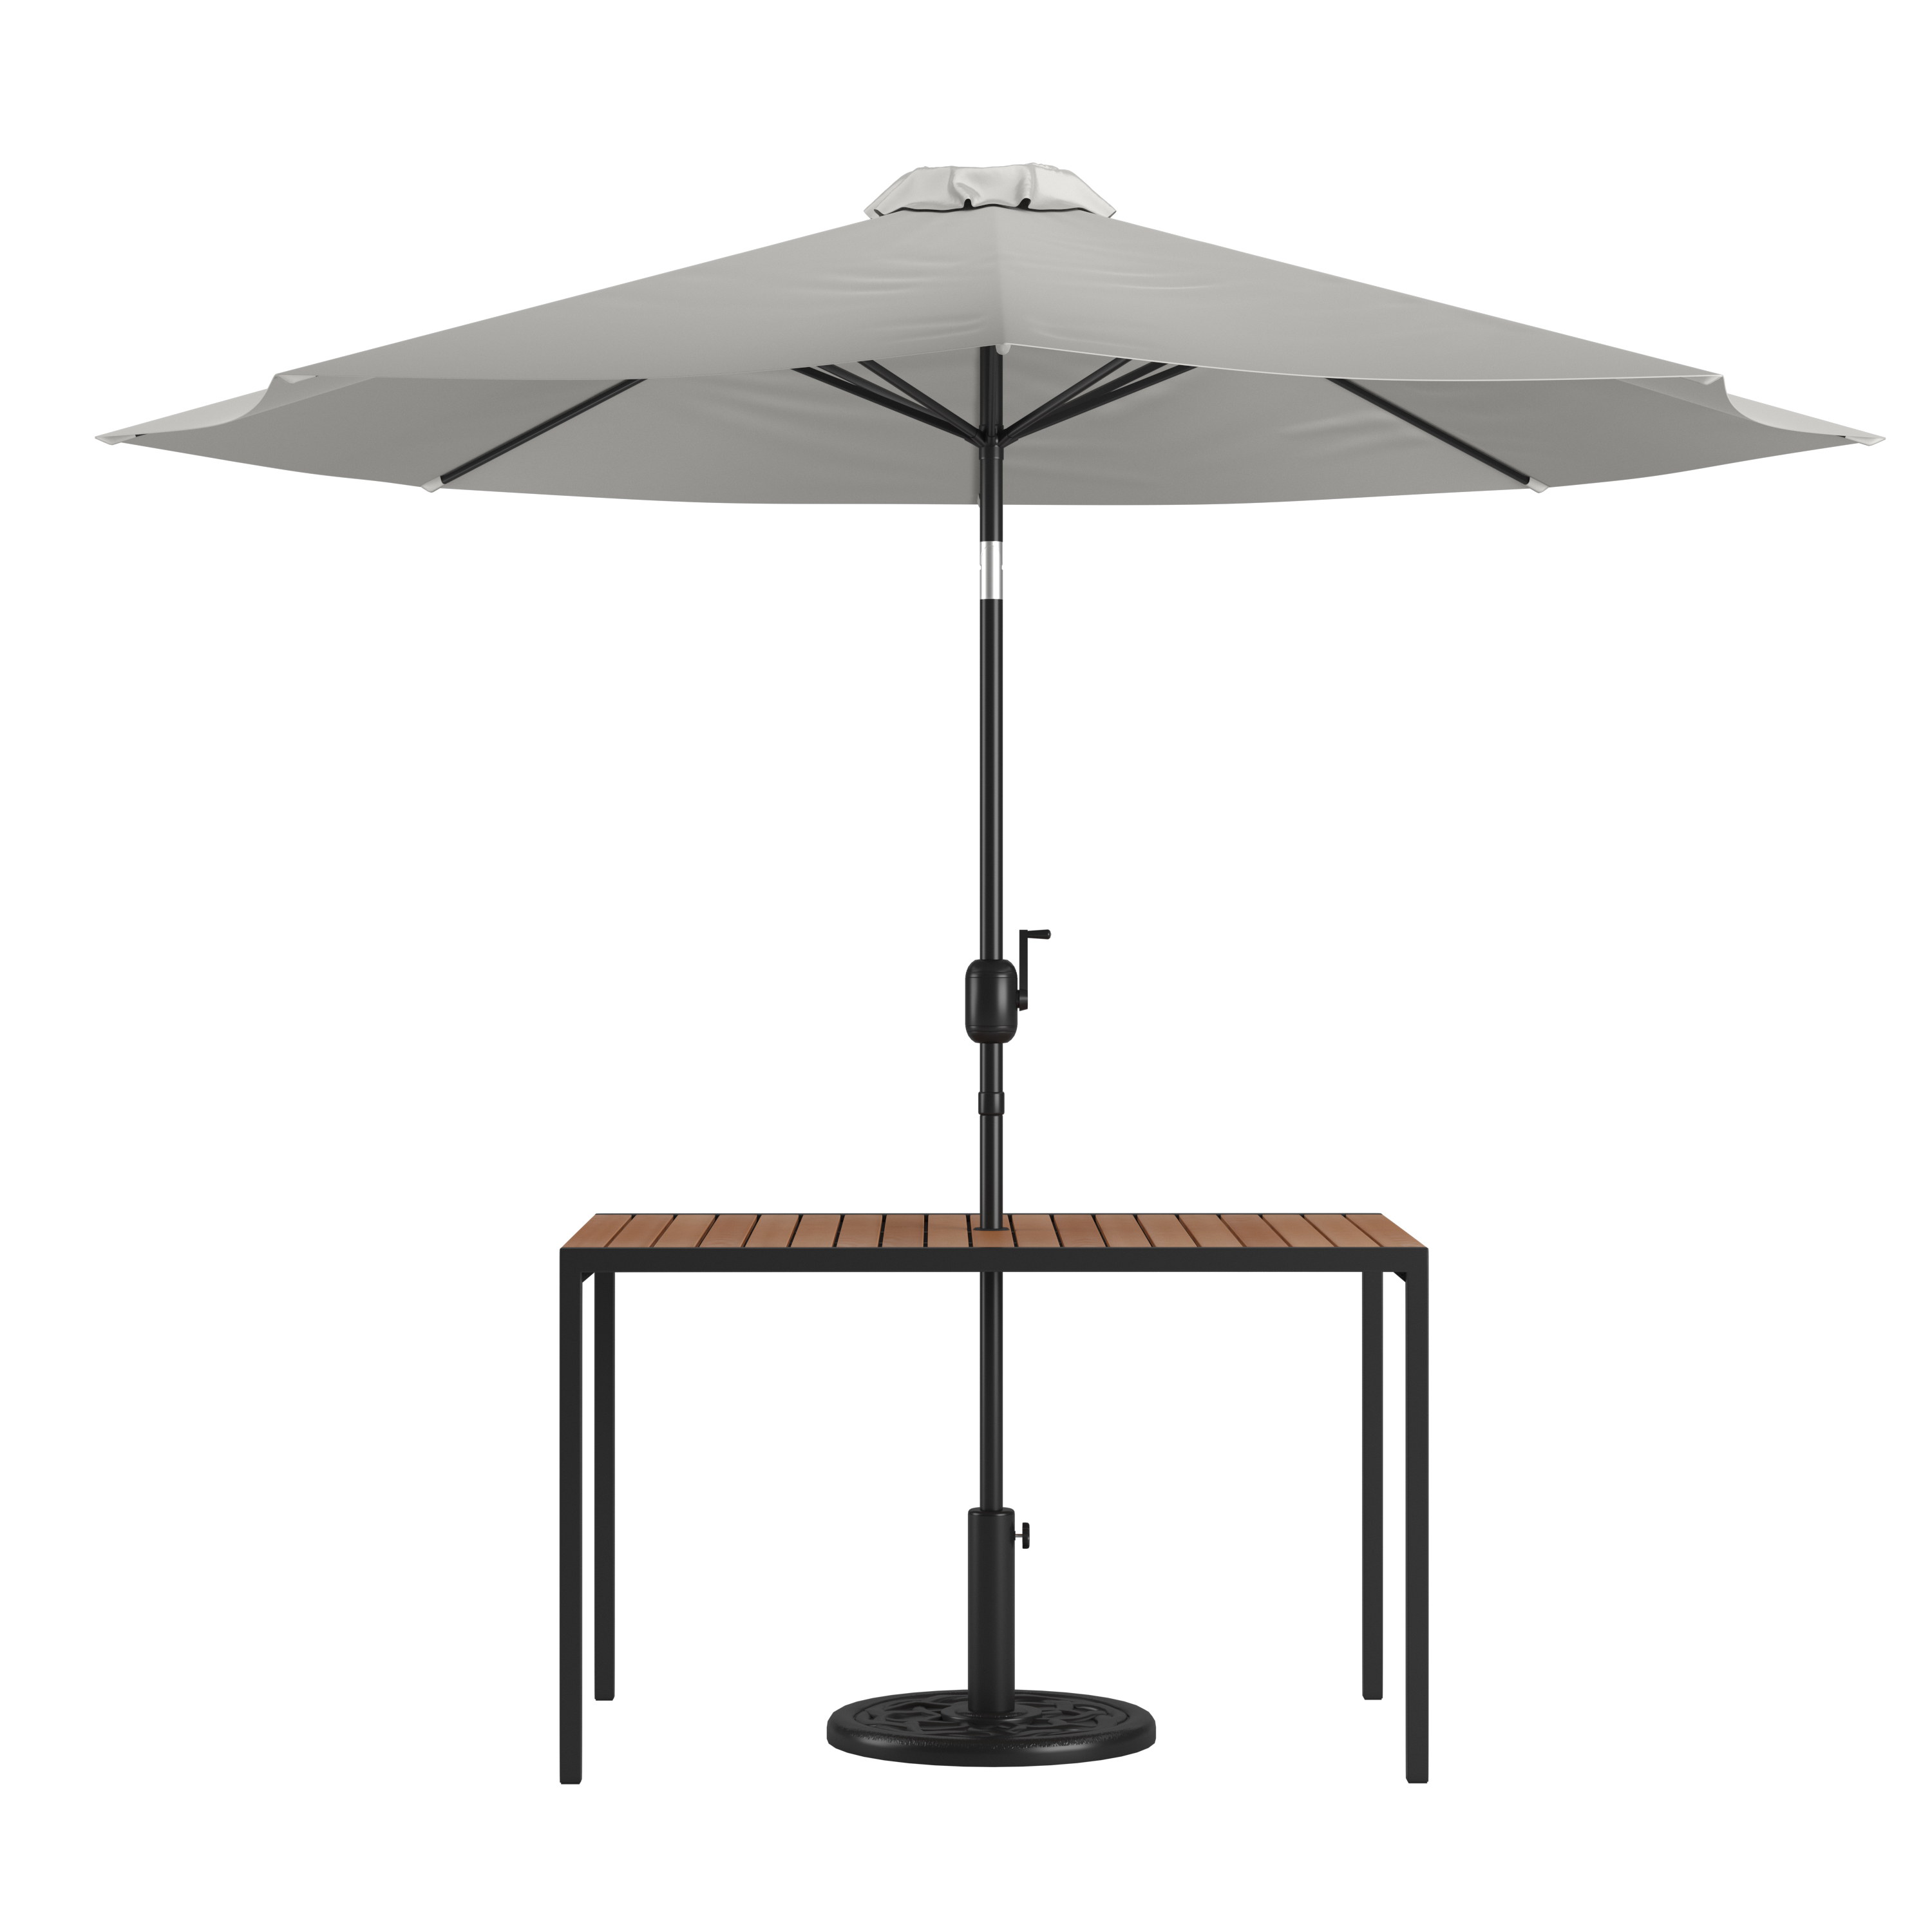 Flash Furniture XU-DG-UH3048-UB19BGY-GG 30" x 48" Synthetic Teak Patio Table with Gray Umbrella and Base, 3-Piece Set